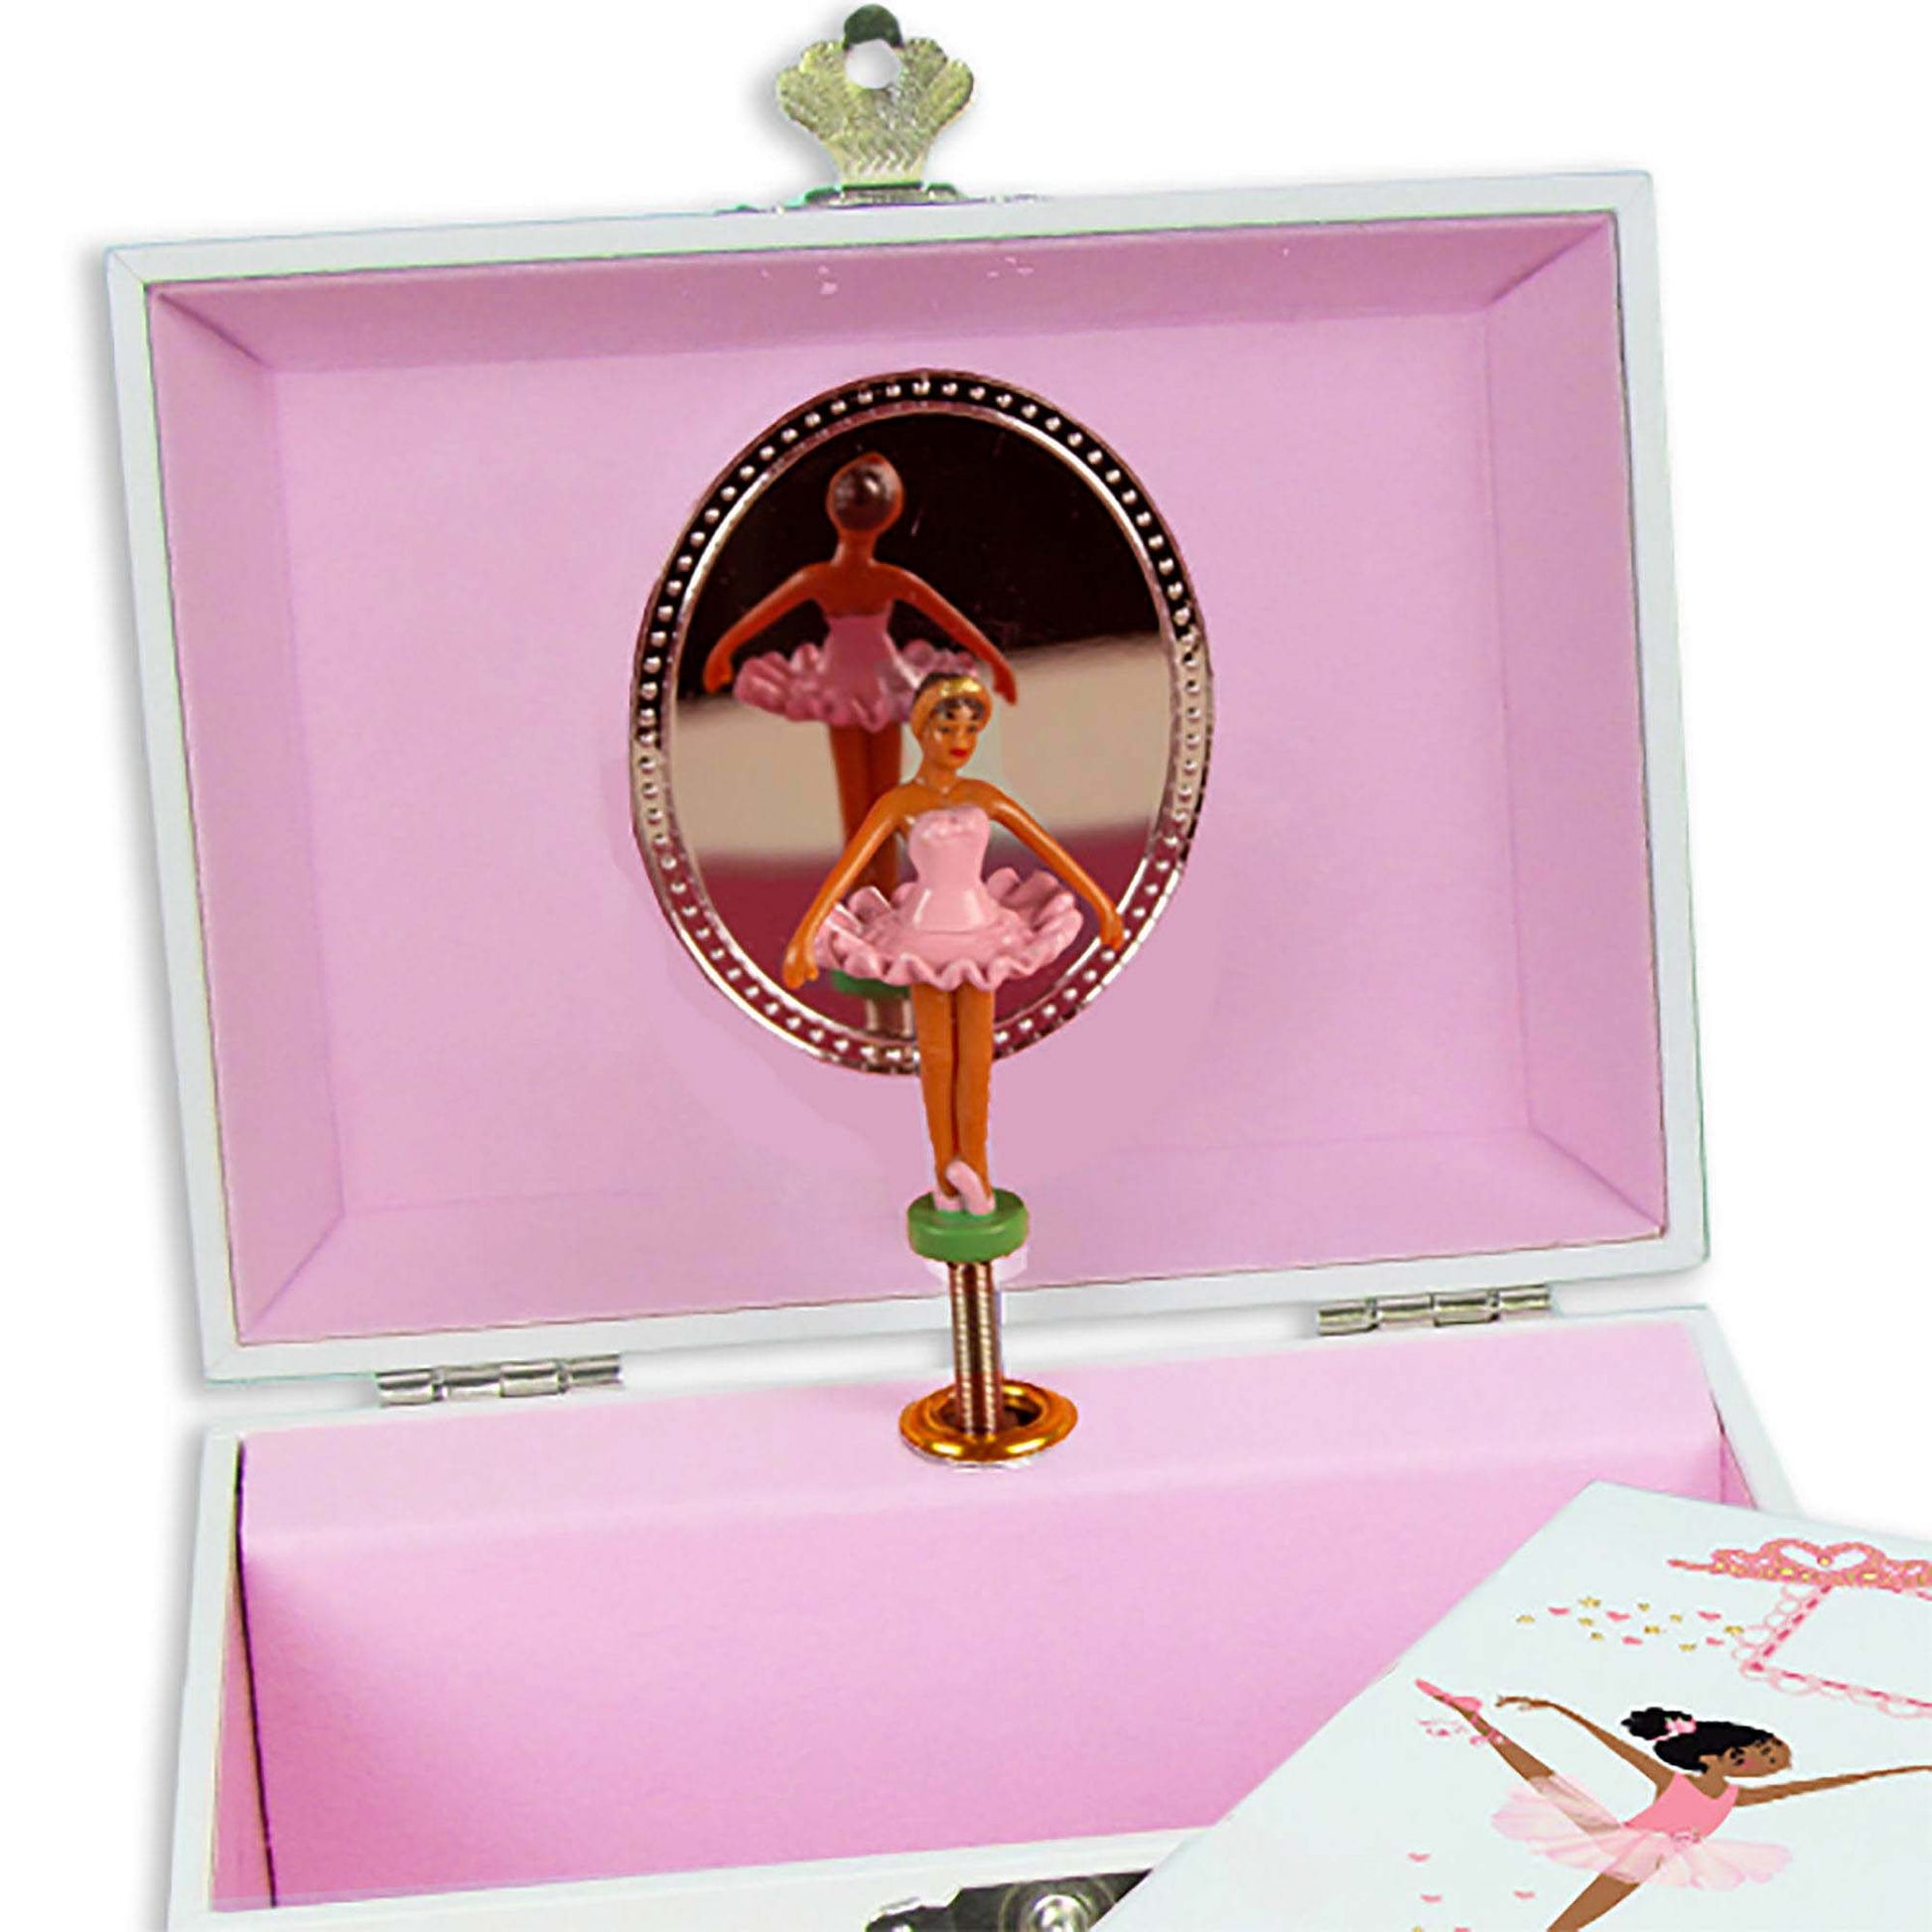 Personalized Ballerina Jewelry Box boho chic bohemian arrow